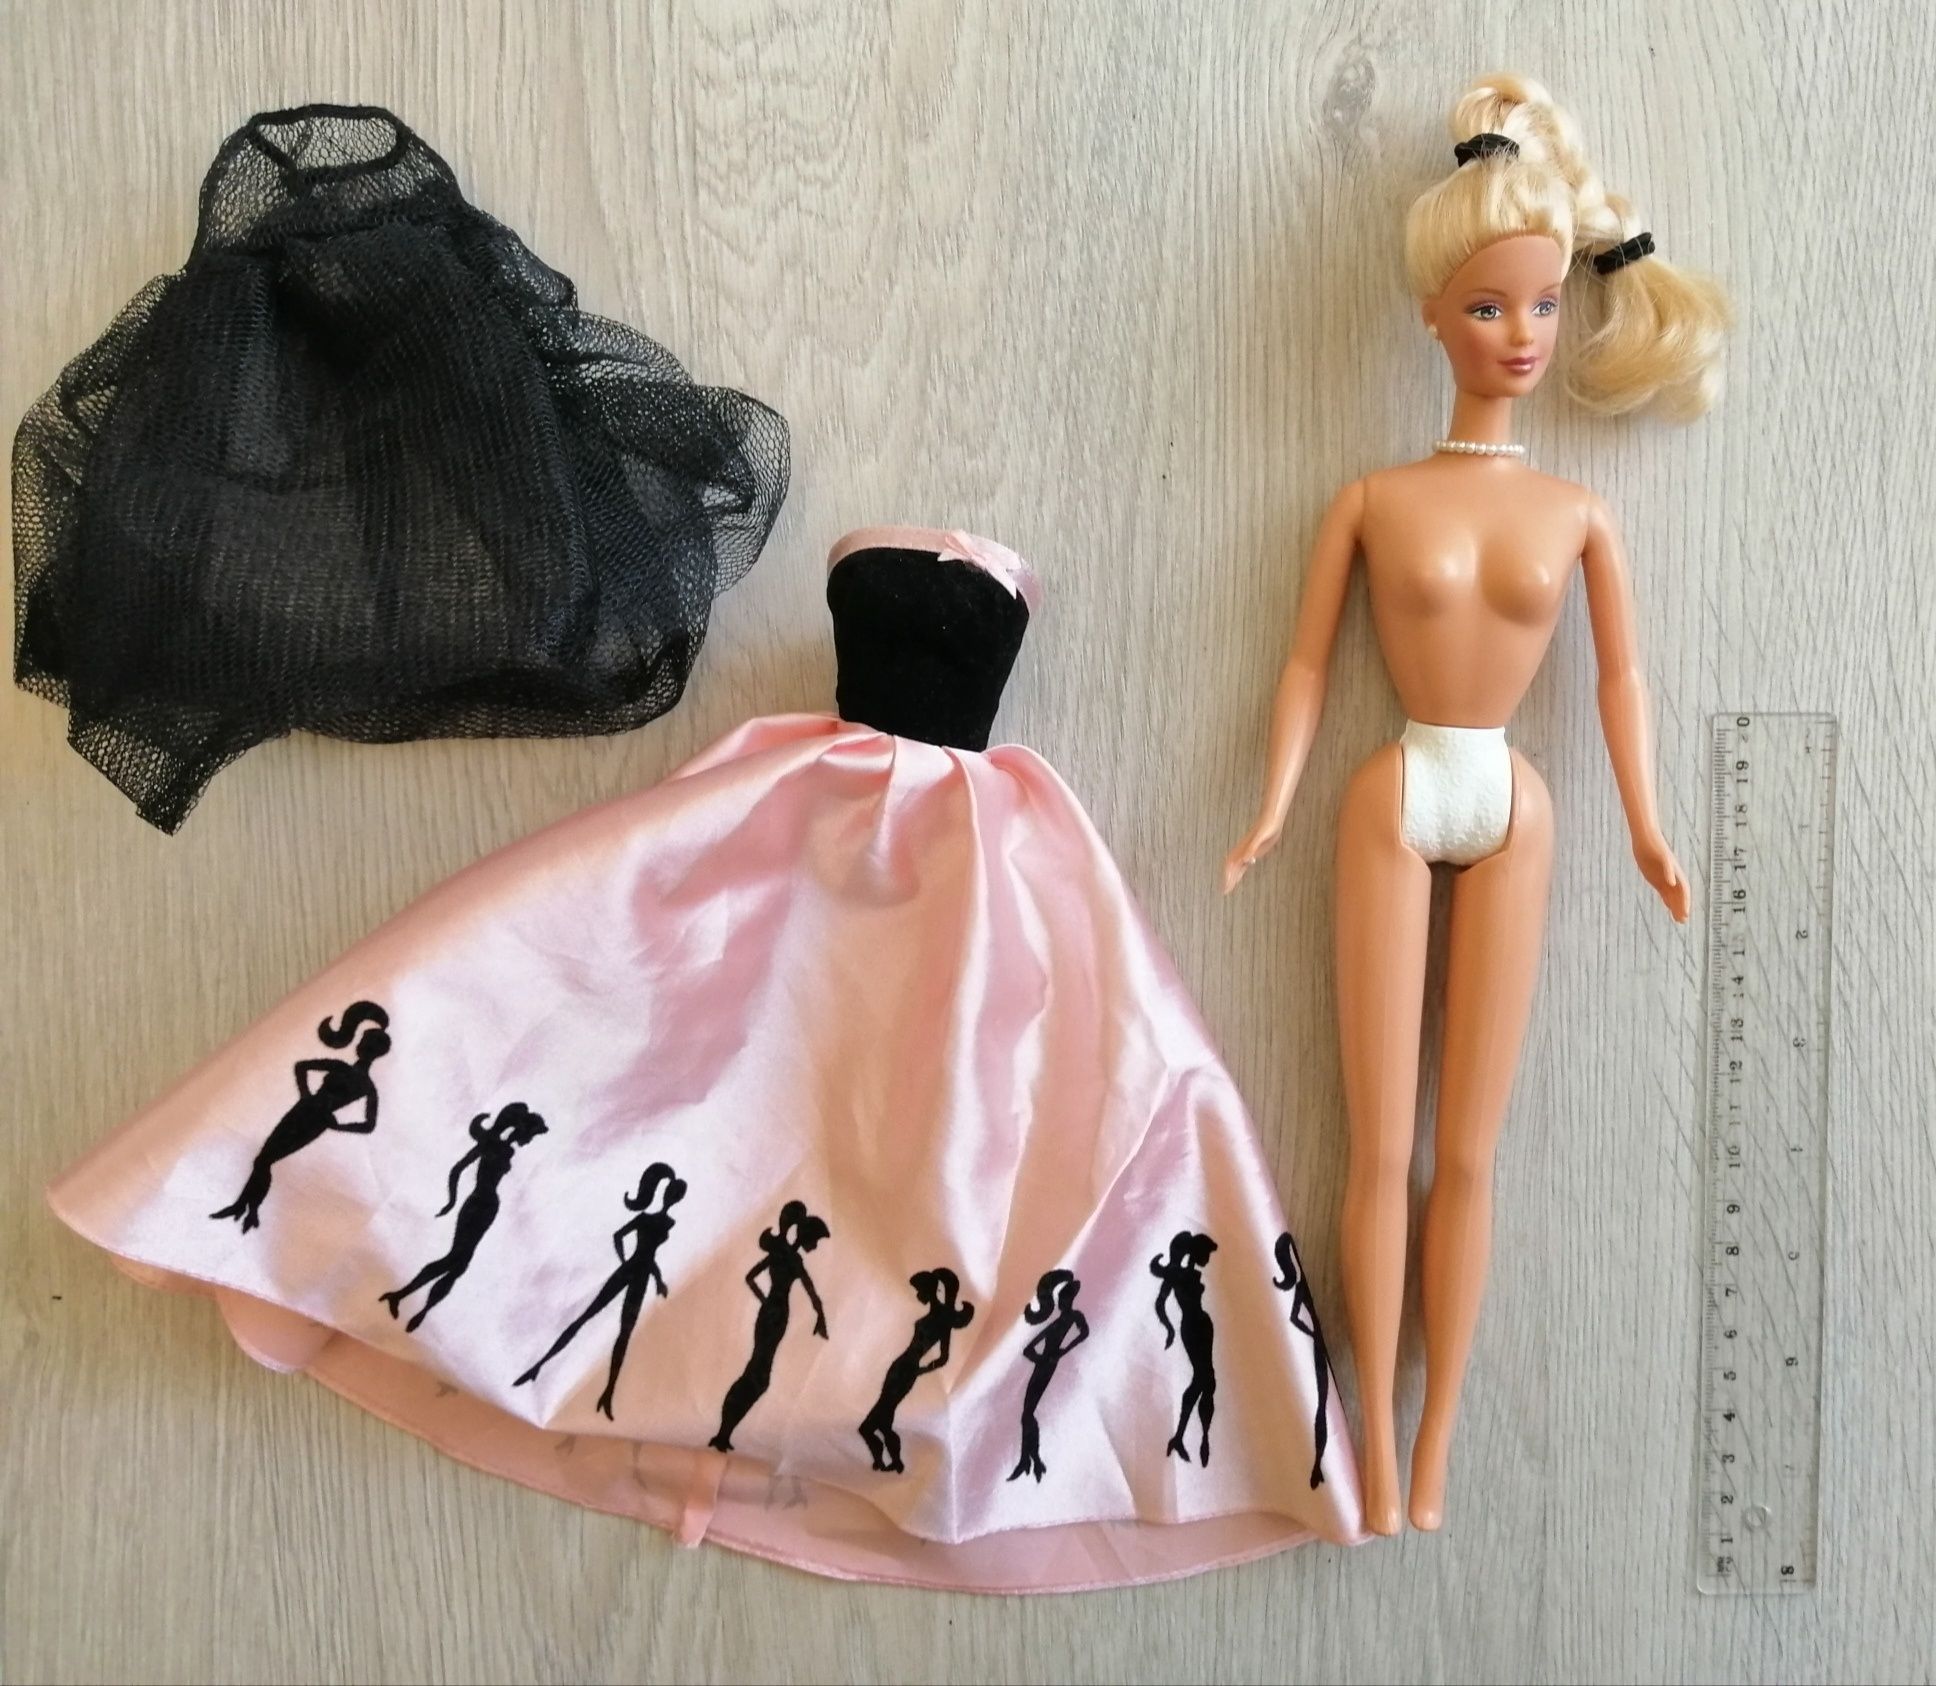 Барби Вечный Силуэт - Timeless Silhouette Barbie. Mattel. Avon.